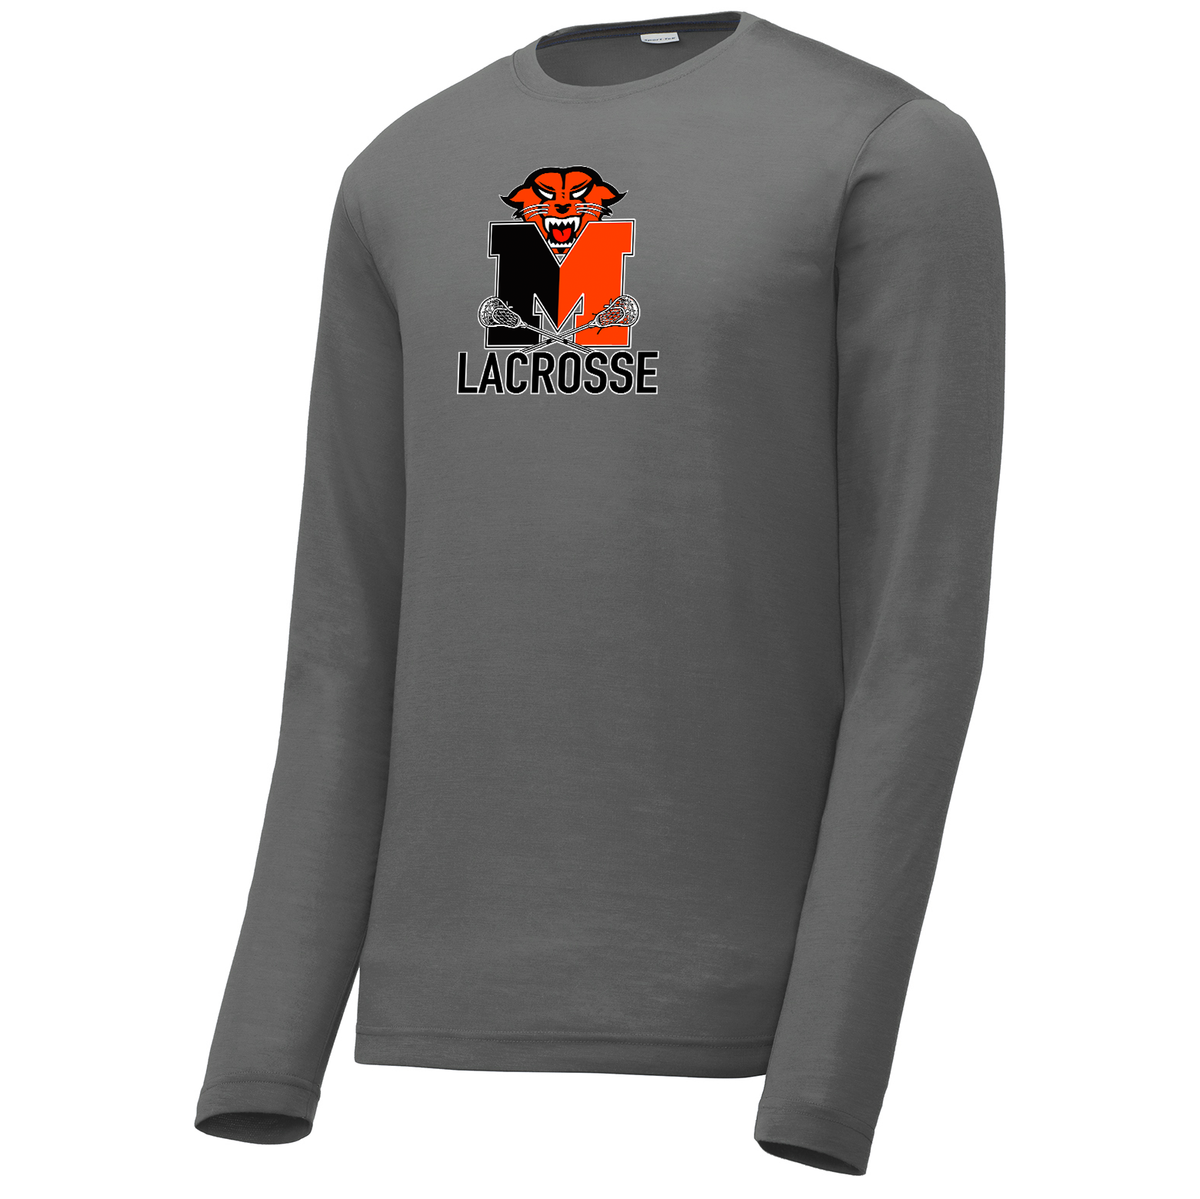 Monroe Lacrosse Smoke Grey Long Sleeve CottonTouch Performance Shirt